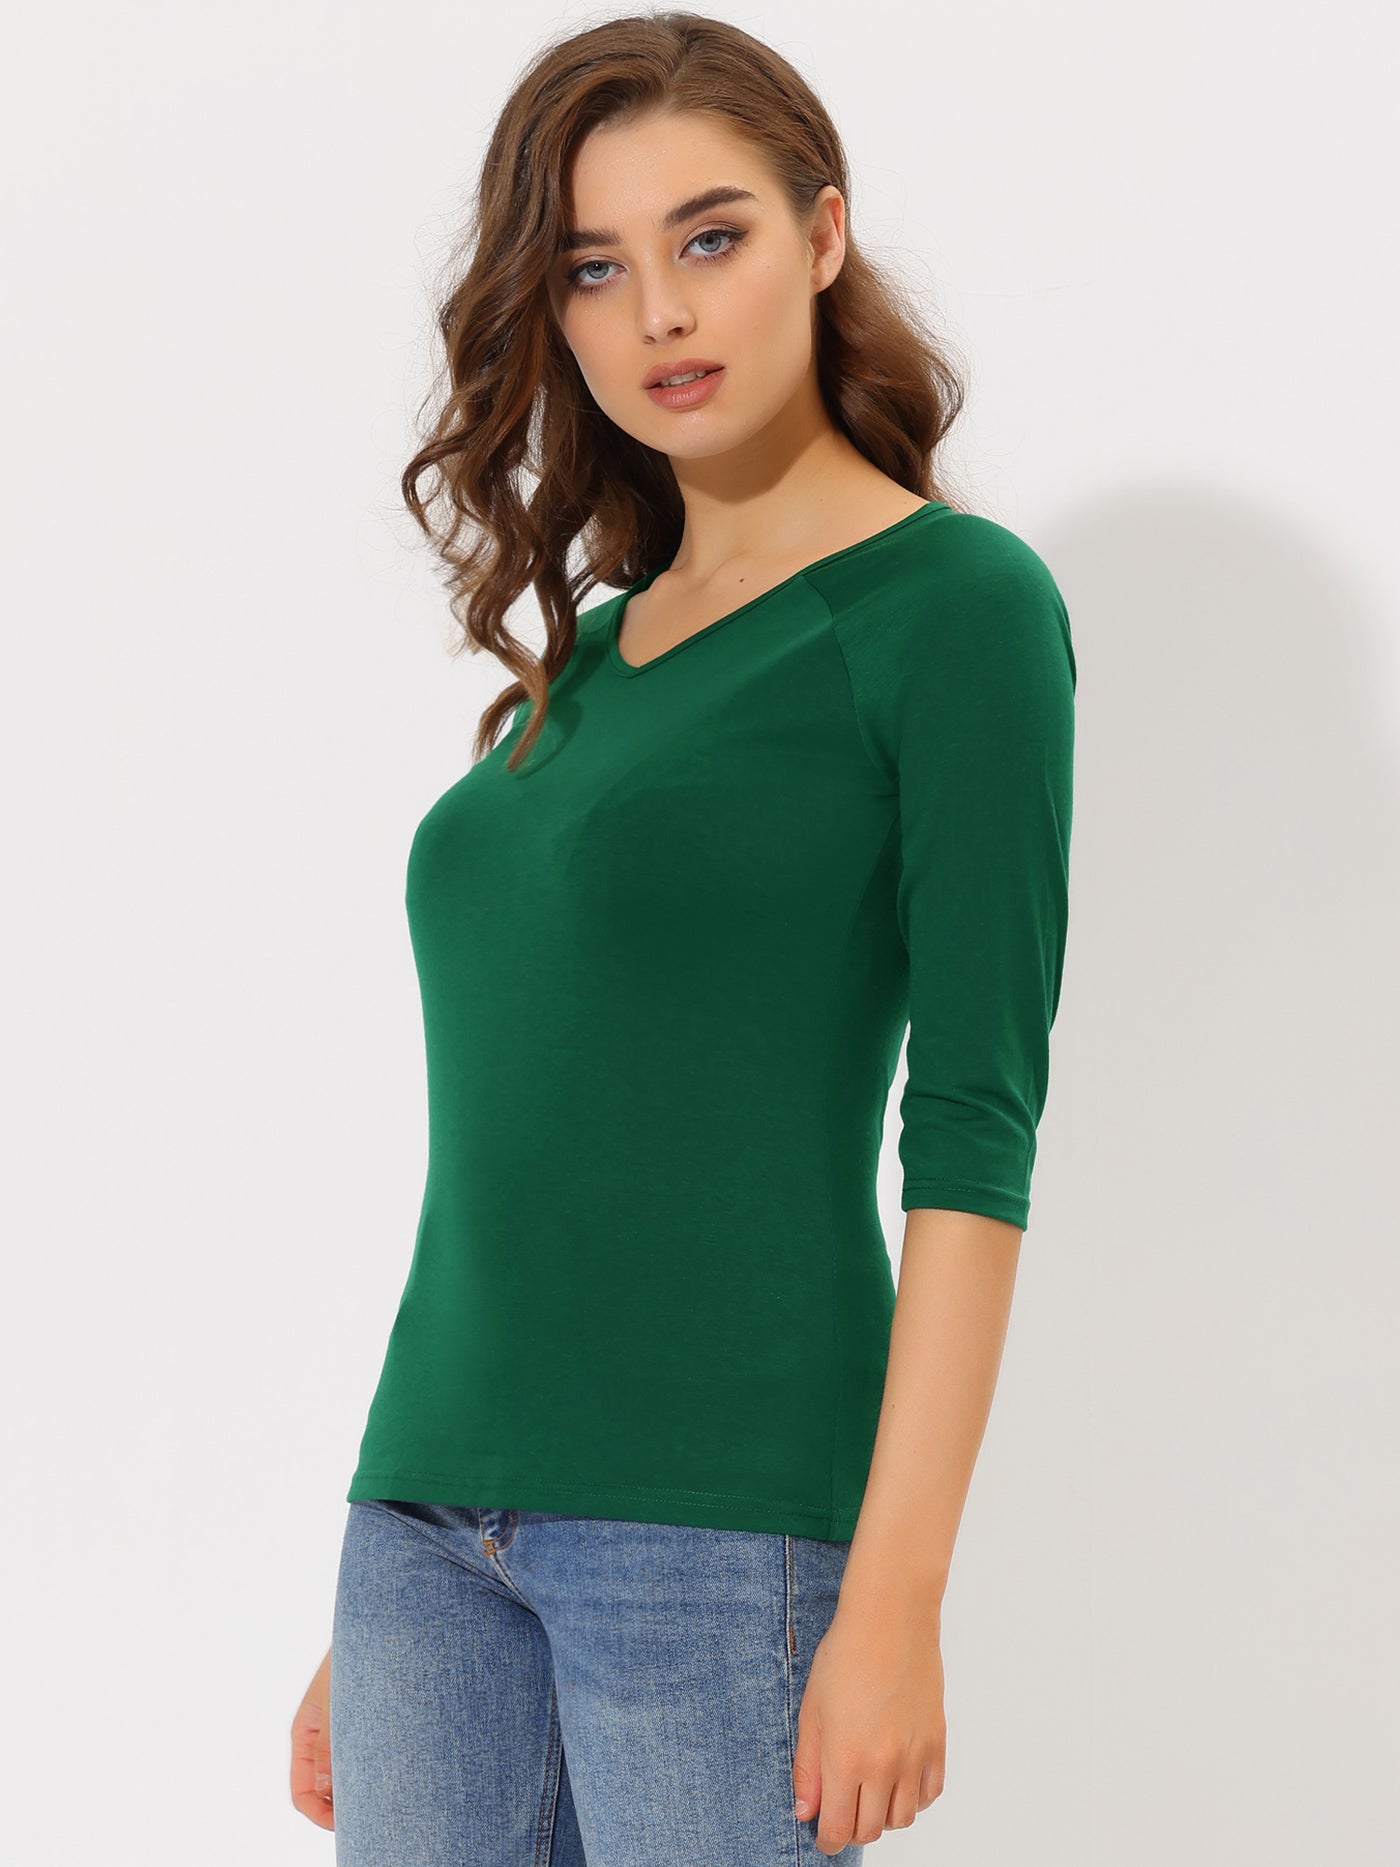 Allegra K Women's St. Patrick's Day T-Shirt 3/4 Raglan Sleeve Solid Color V Neck Basic Tee Shirt